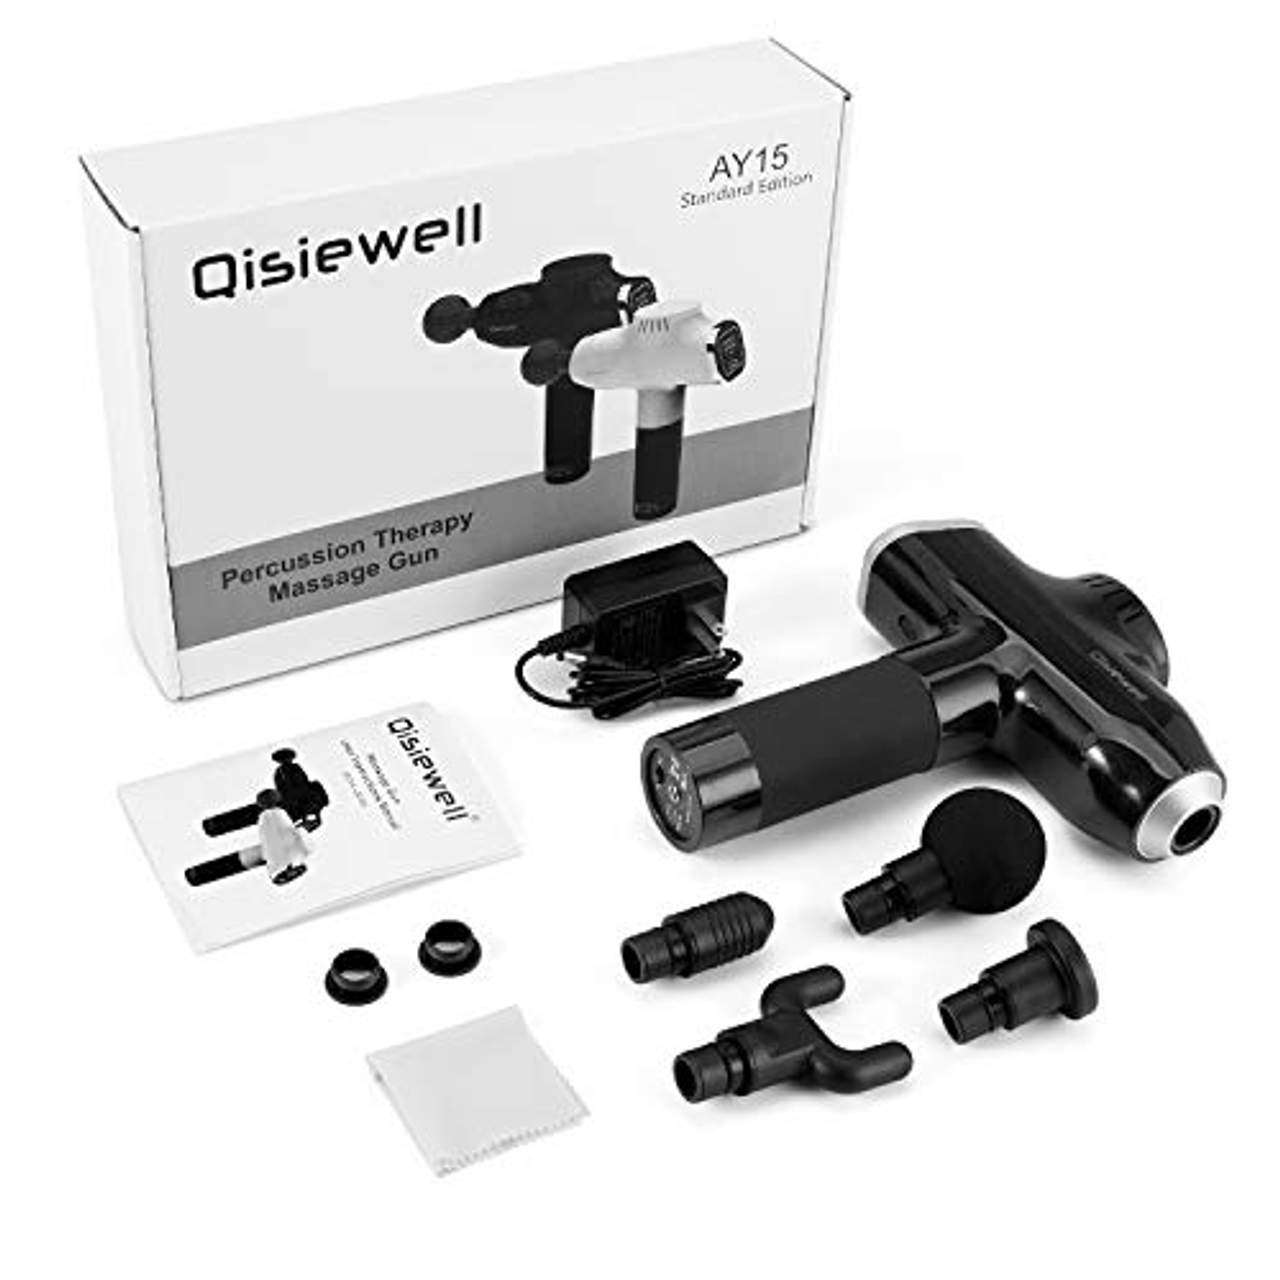 Qisiewell AY15 Massagepistole Elektrisches Hand-Massagegerät